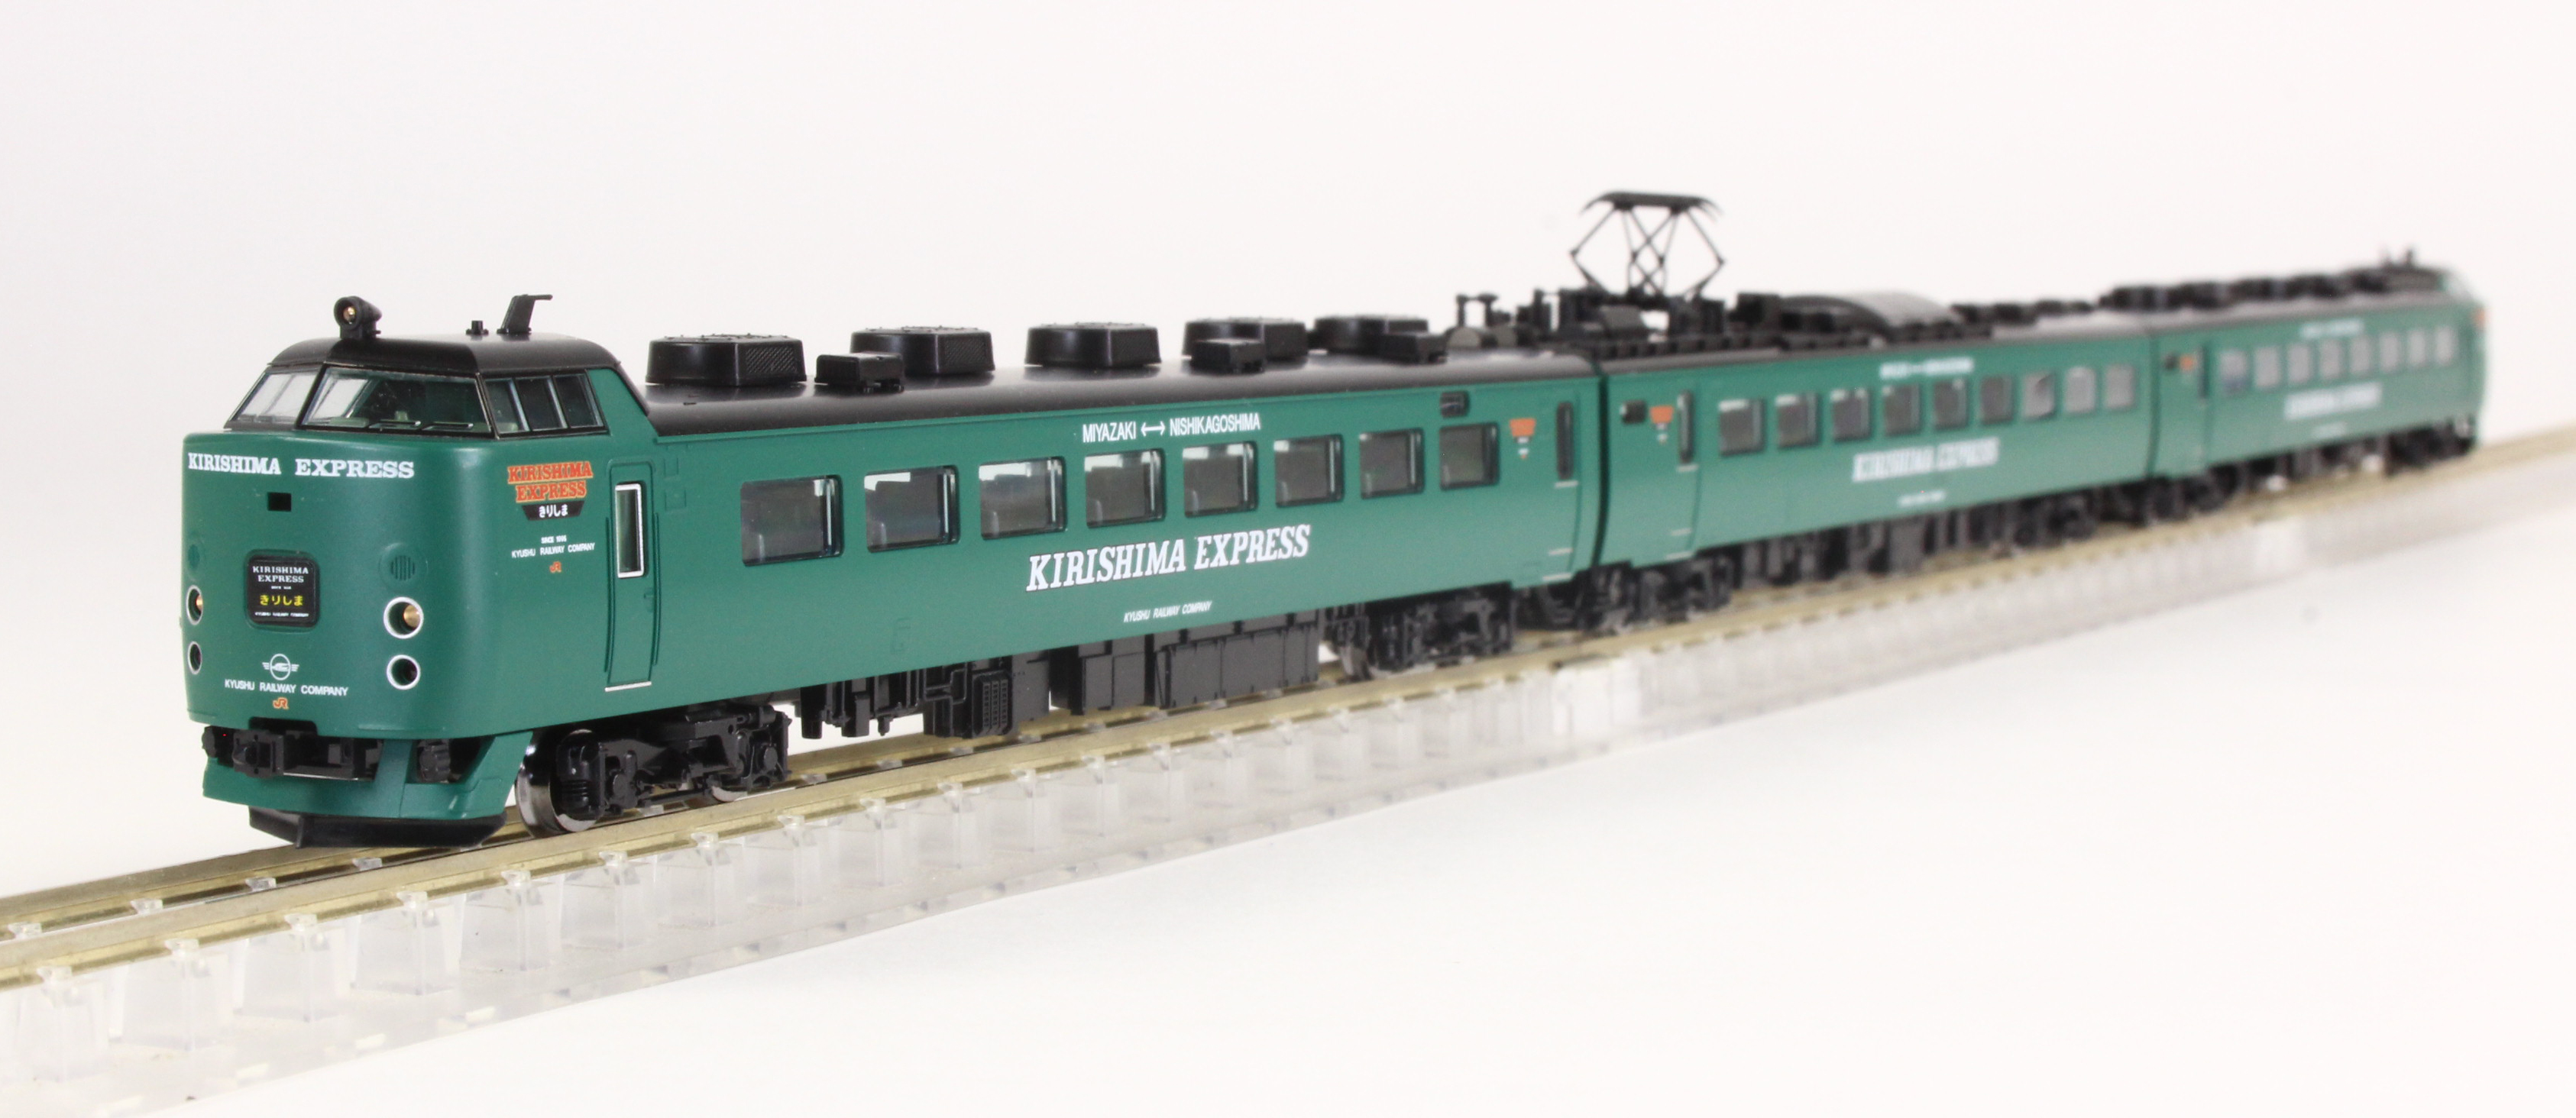 最新最全の TOMIX 98469 JR 485系(KIRISHIMA EXPRESS) 鉄道模型